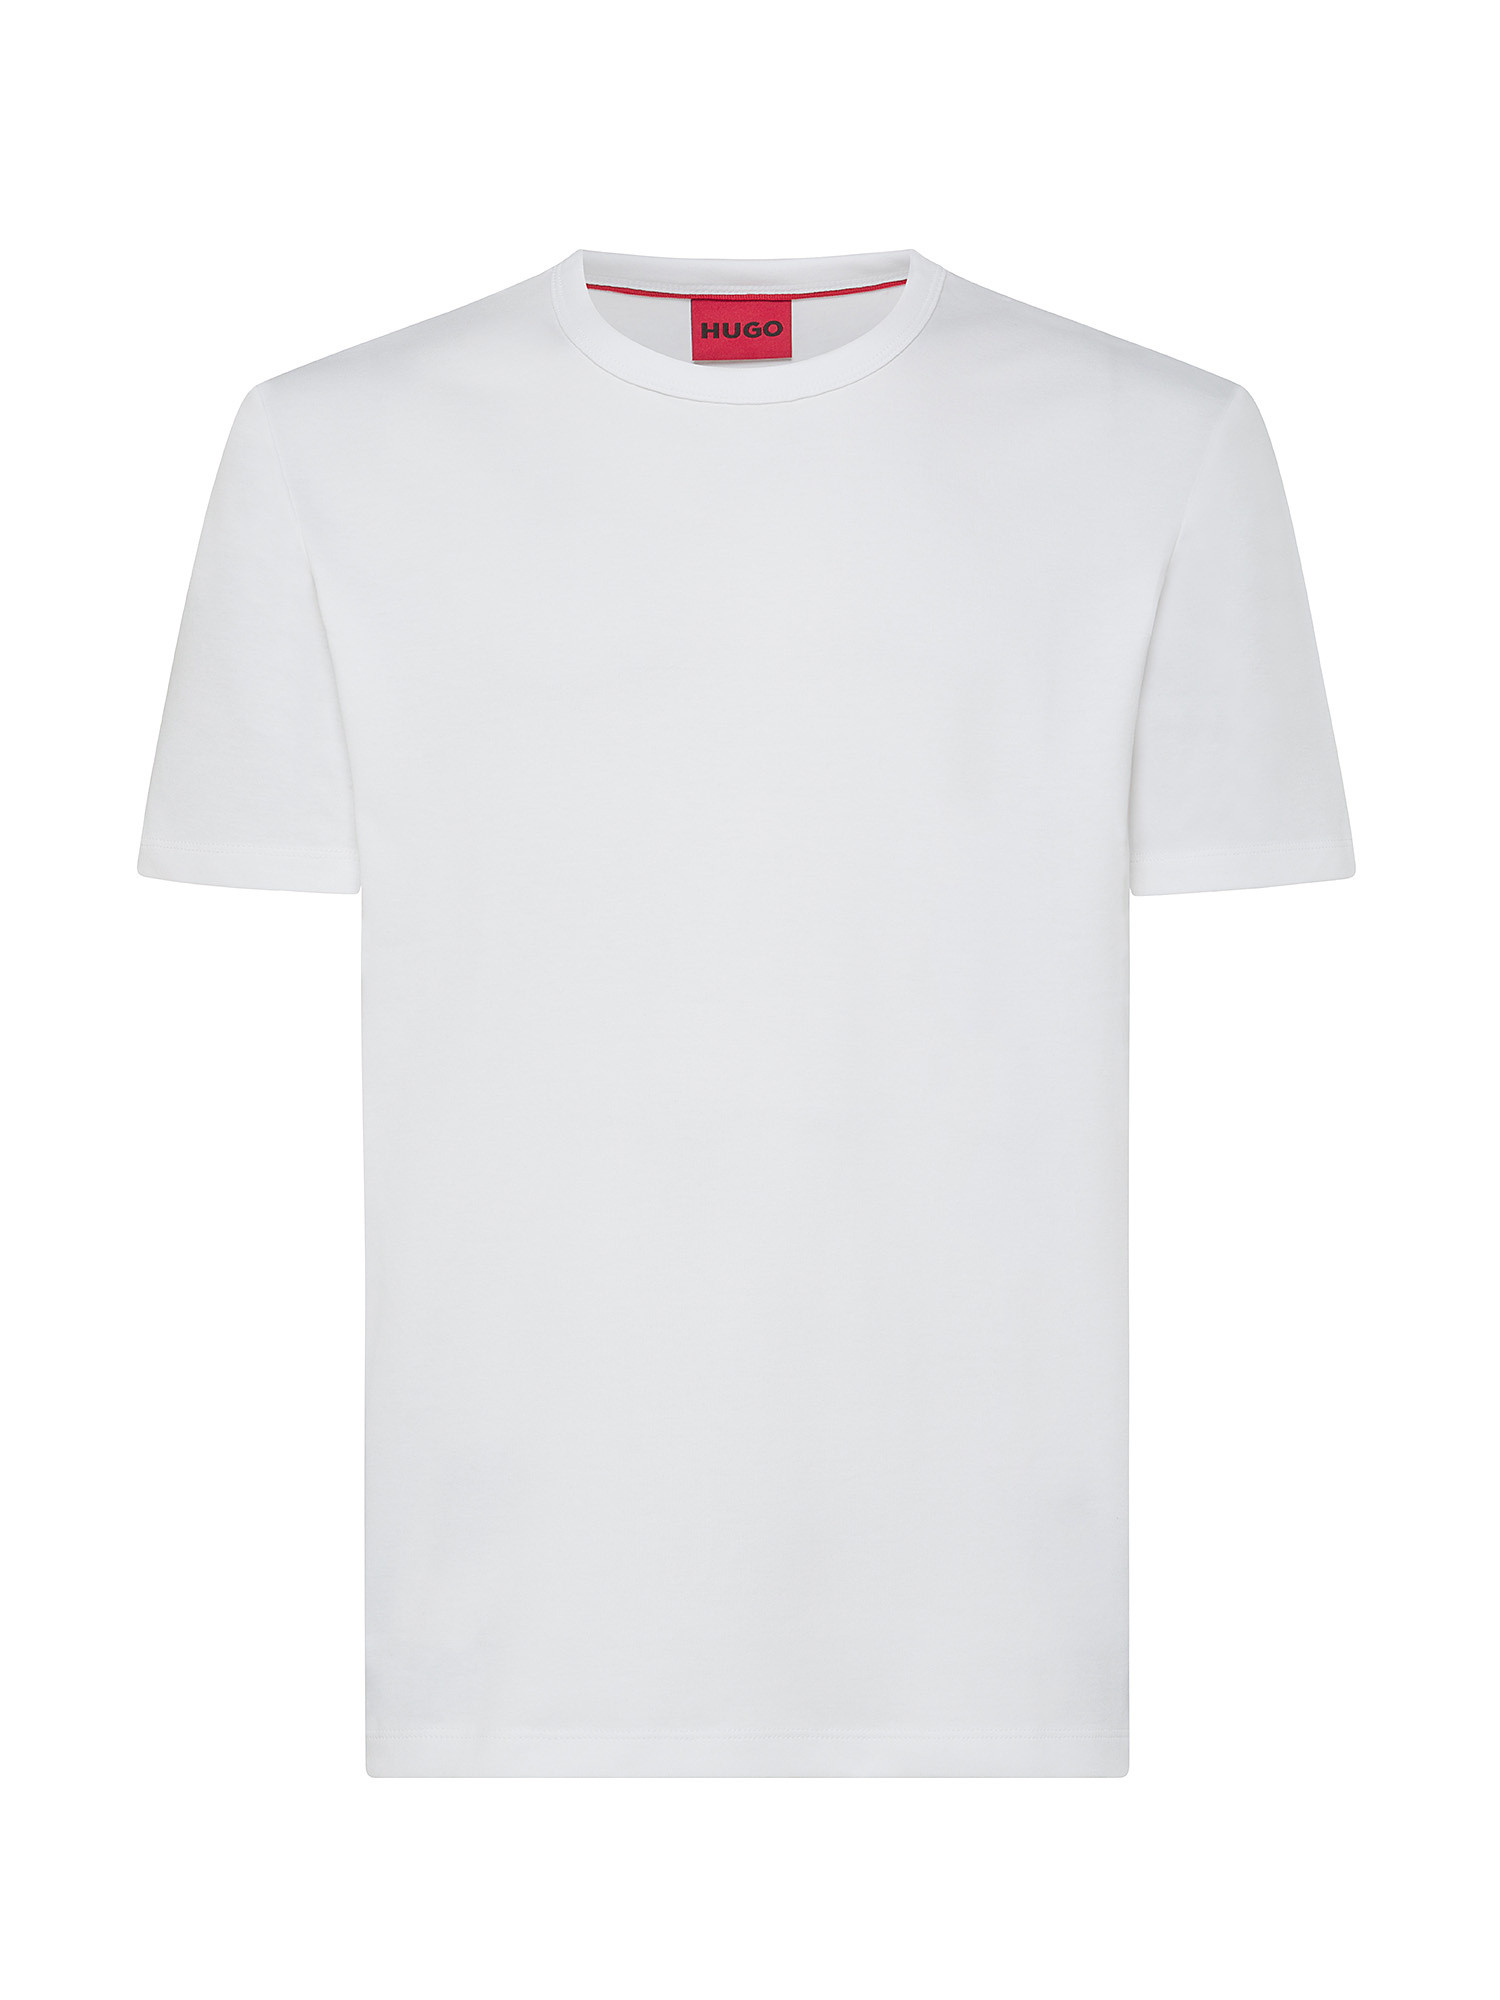 Hugo - T-shirt in cotone, Bianco, large image number 0